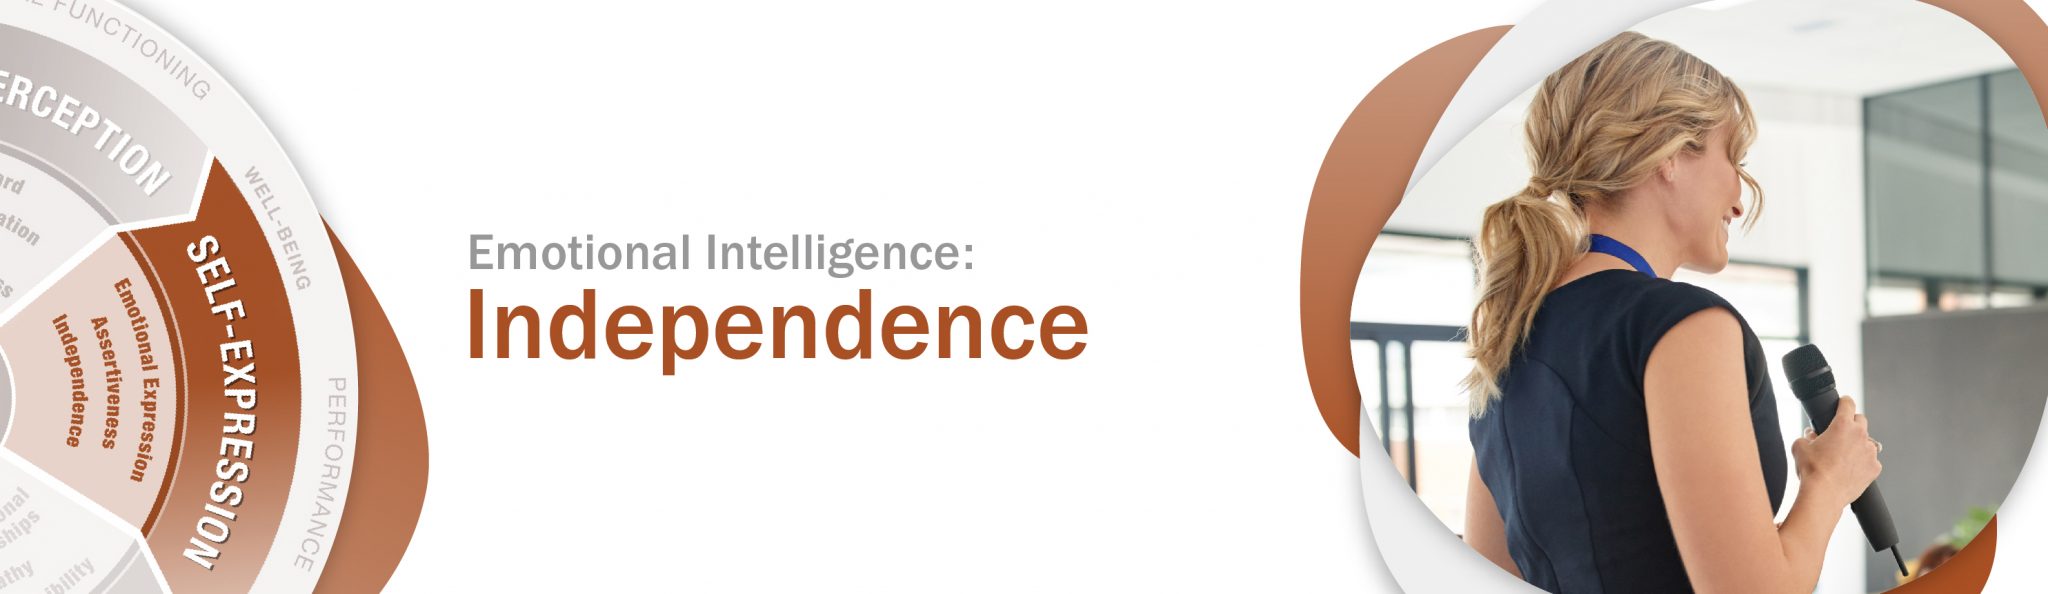 Leading with Emotional Intelligence: Independence